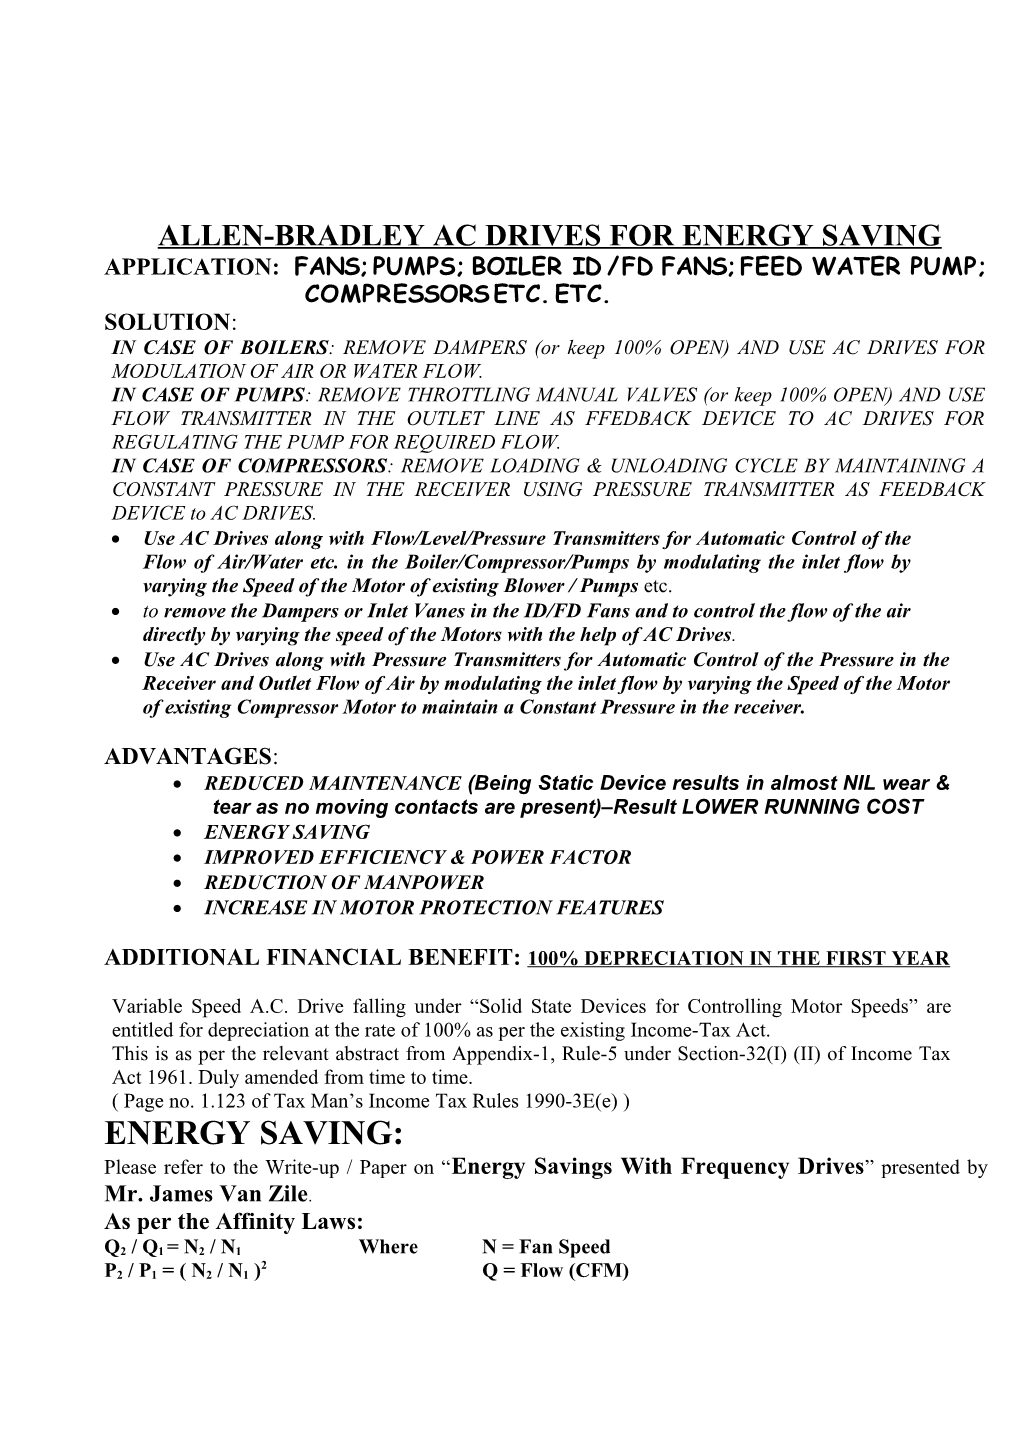 Allen-Bradley Ac Drives for Energy Saving